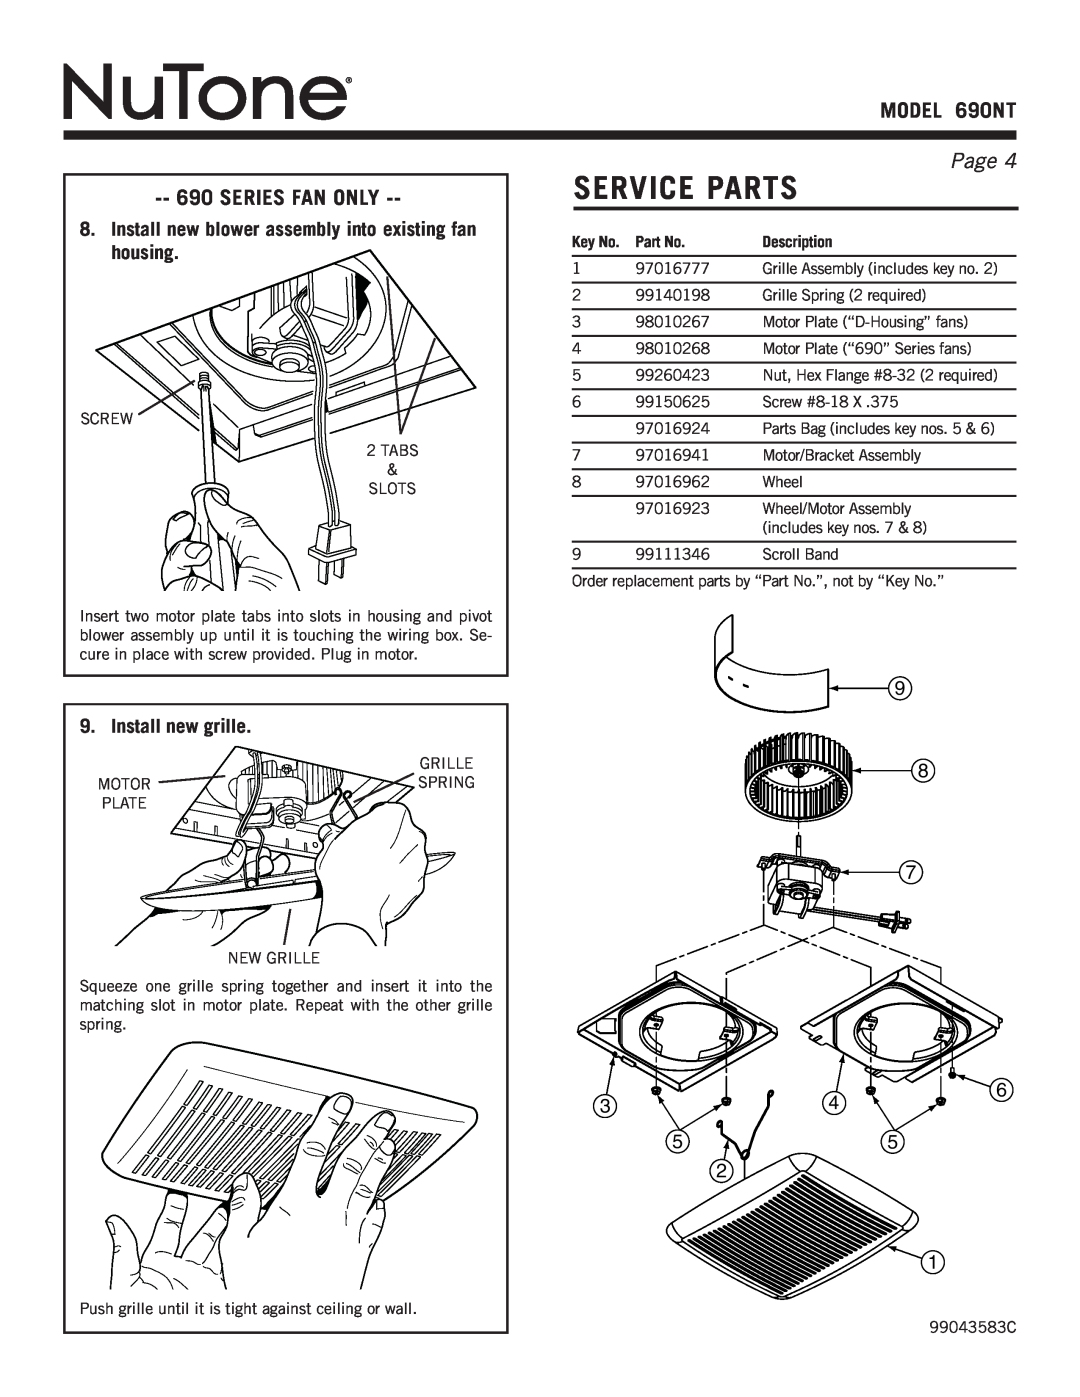 NuTone warranty service parts, model 690NT, series fan only, Page , Description 